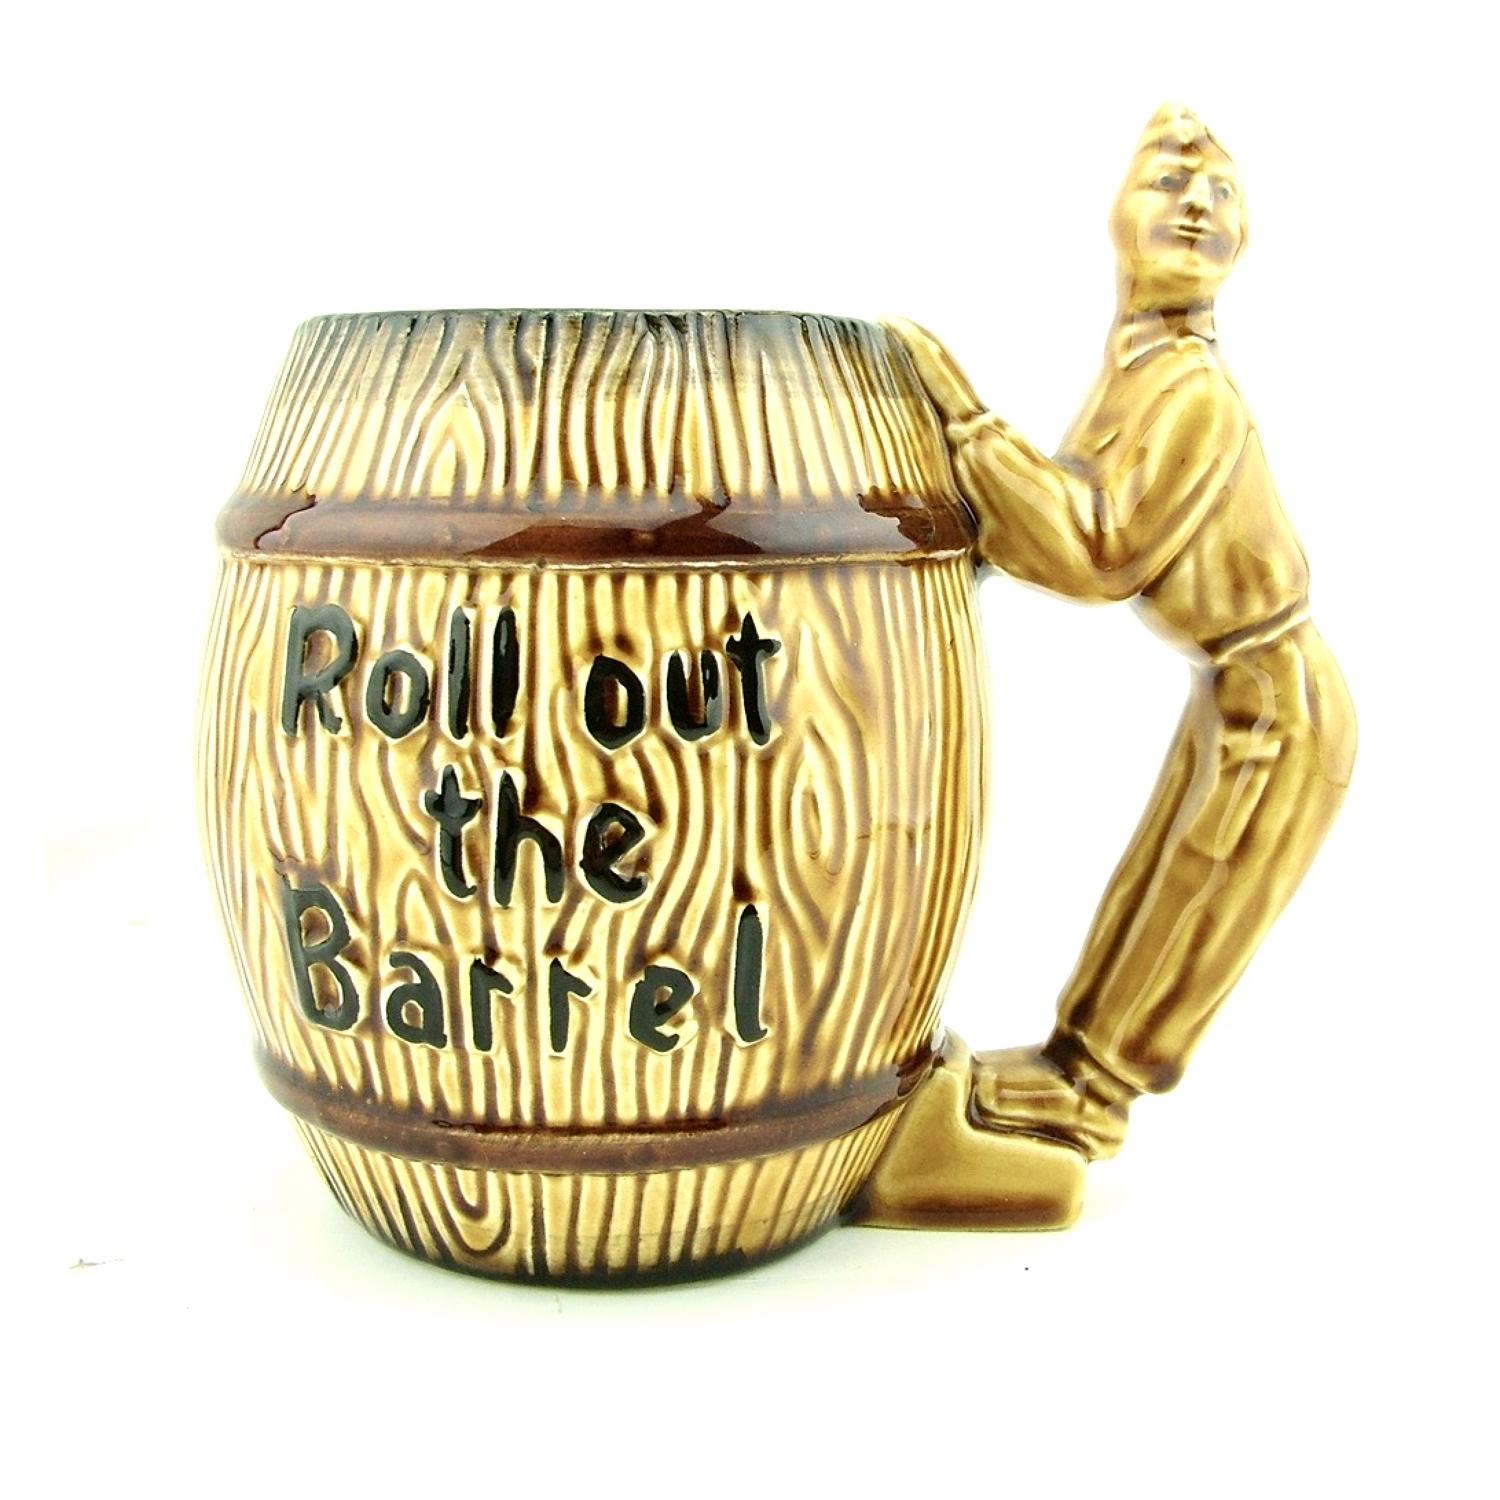 Roll out the barrel mug